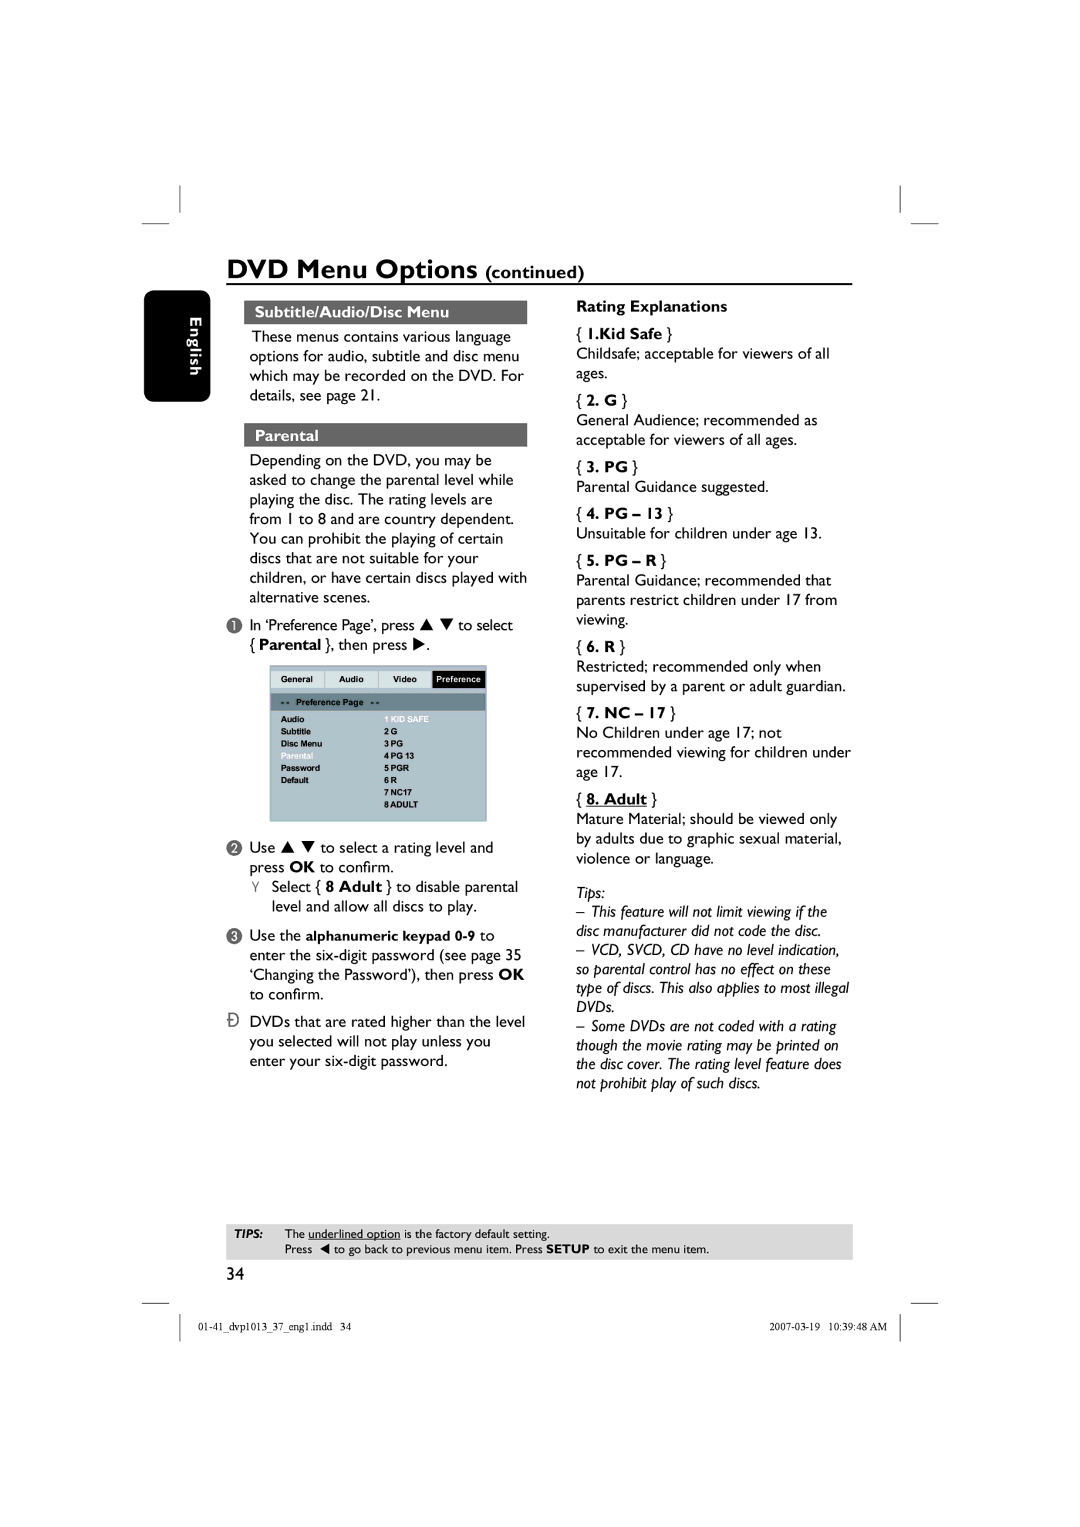 Philips DVP1013 manual English Subtitle/Audio/Disc Menu, Parental, Rating Explanations Kid Safe, Pg R, Adult 